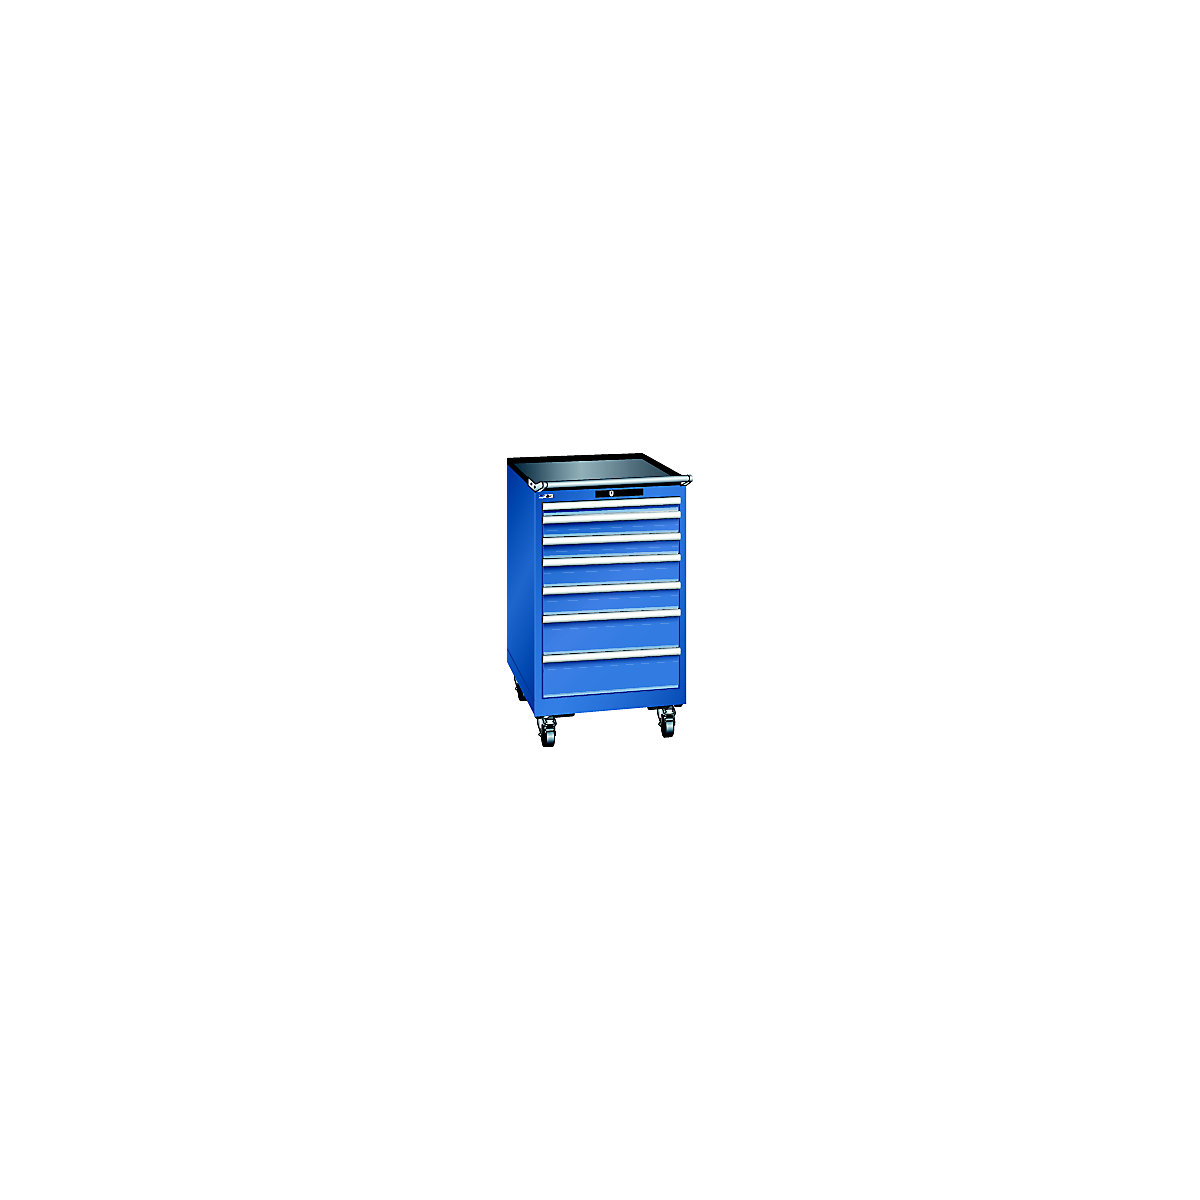 Drawer cupboard, mobile – LISTA